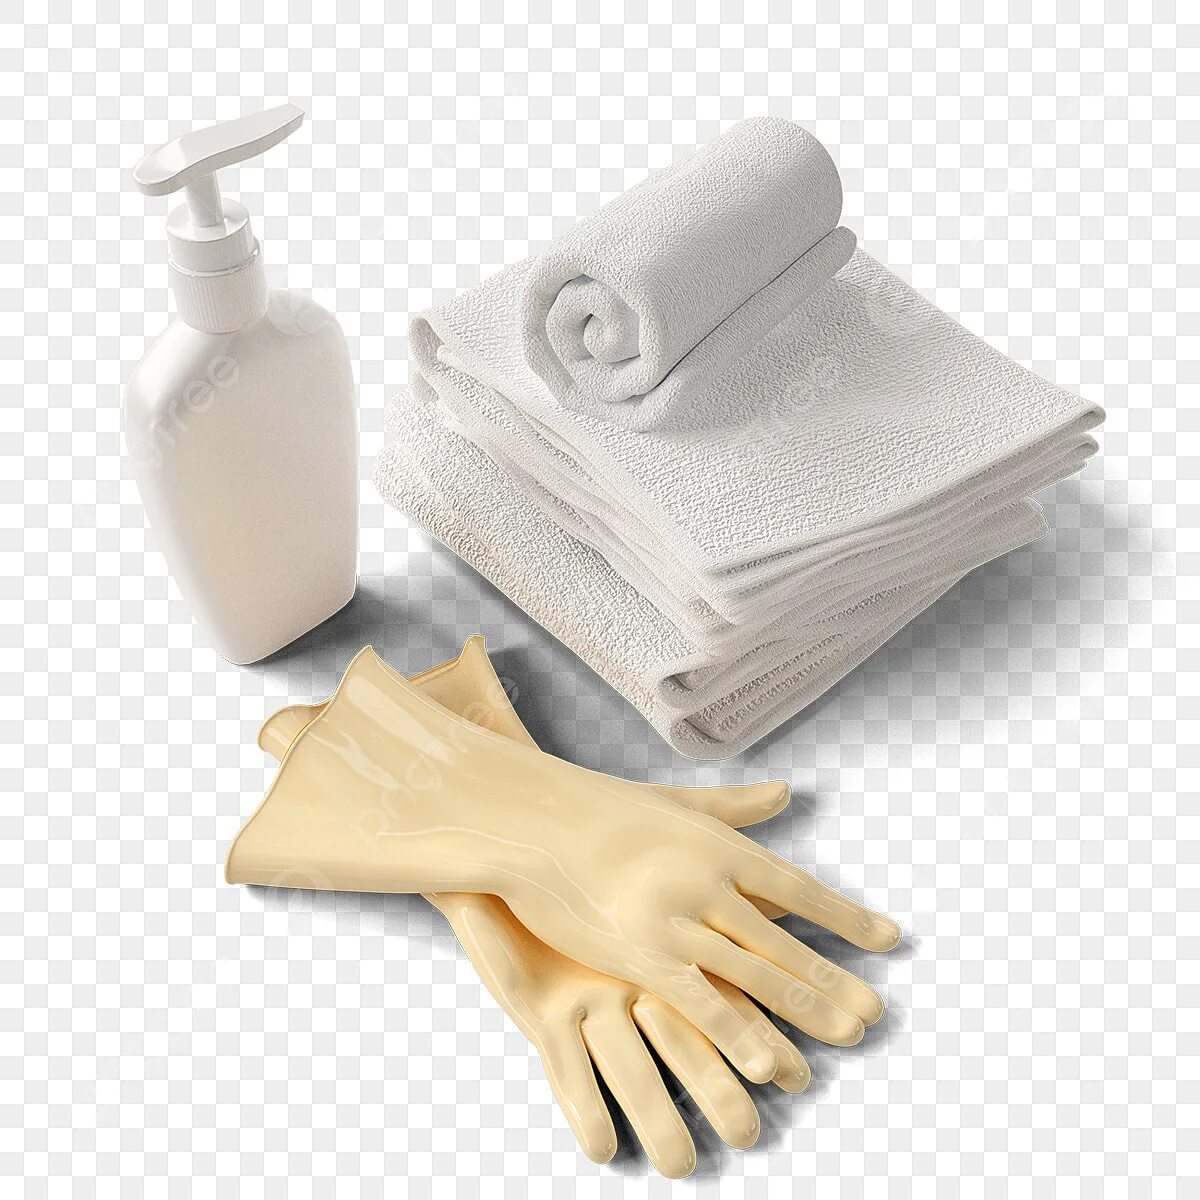 Полотенце перчатка. Перчатки полотенце. Перчатка полотенце резиновая. Перчатки полотенце для чего. Автомобилю мойушний тряапка перчатку полотенца.